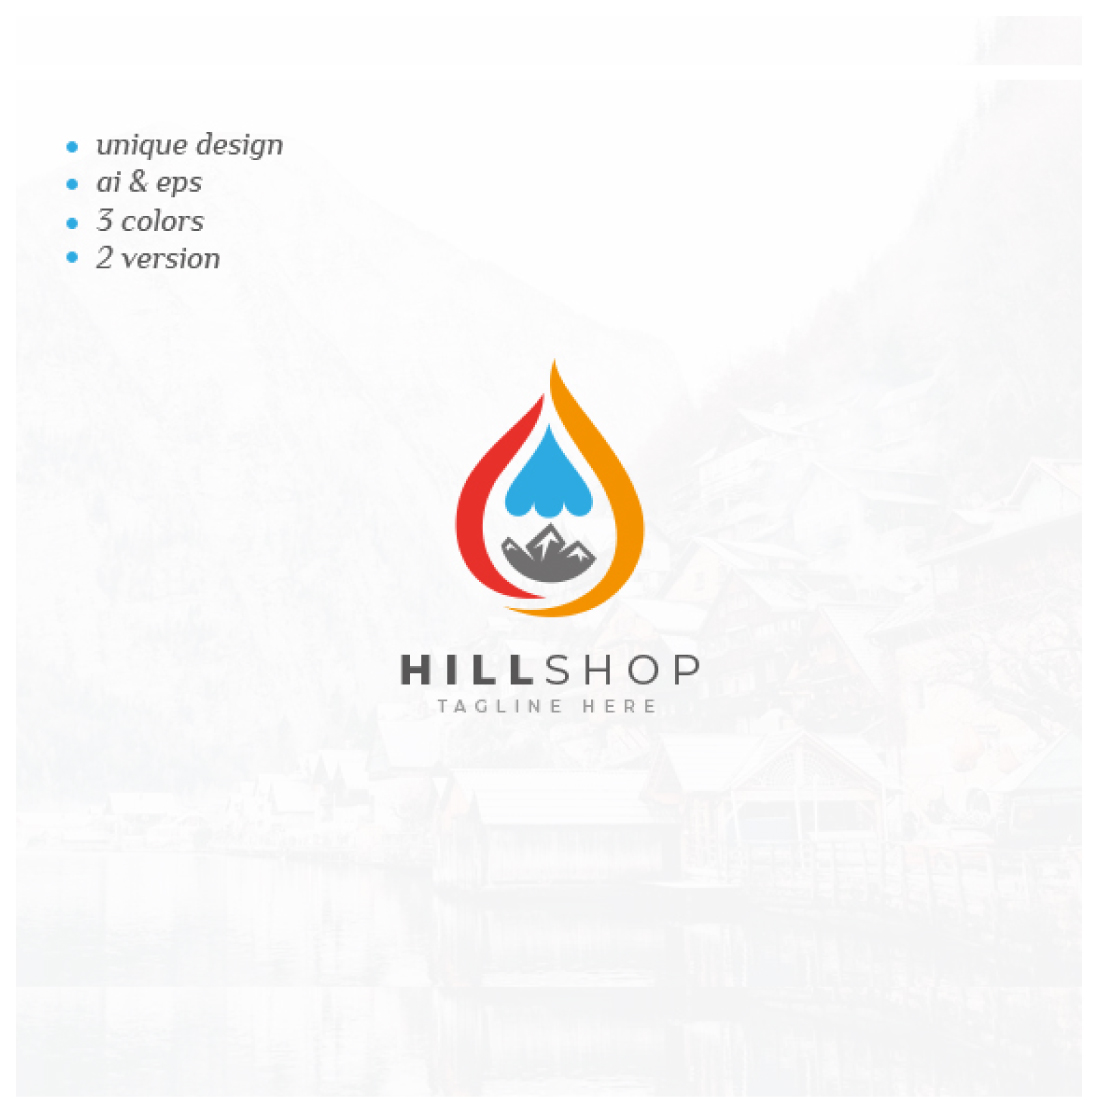 Hillshop Logo cover image.